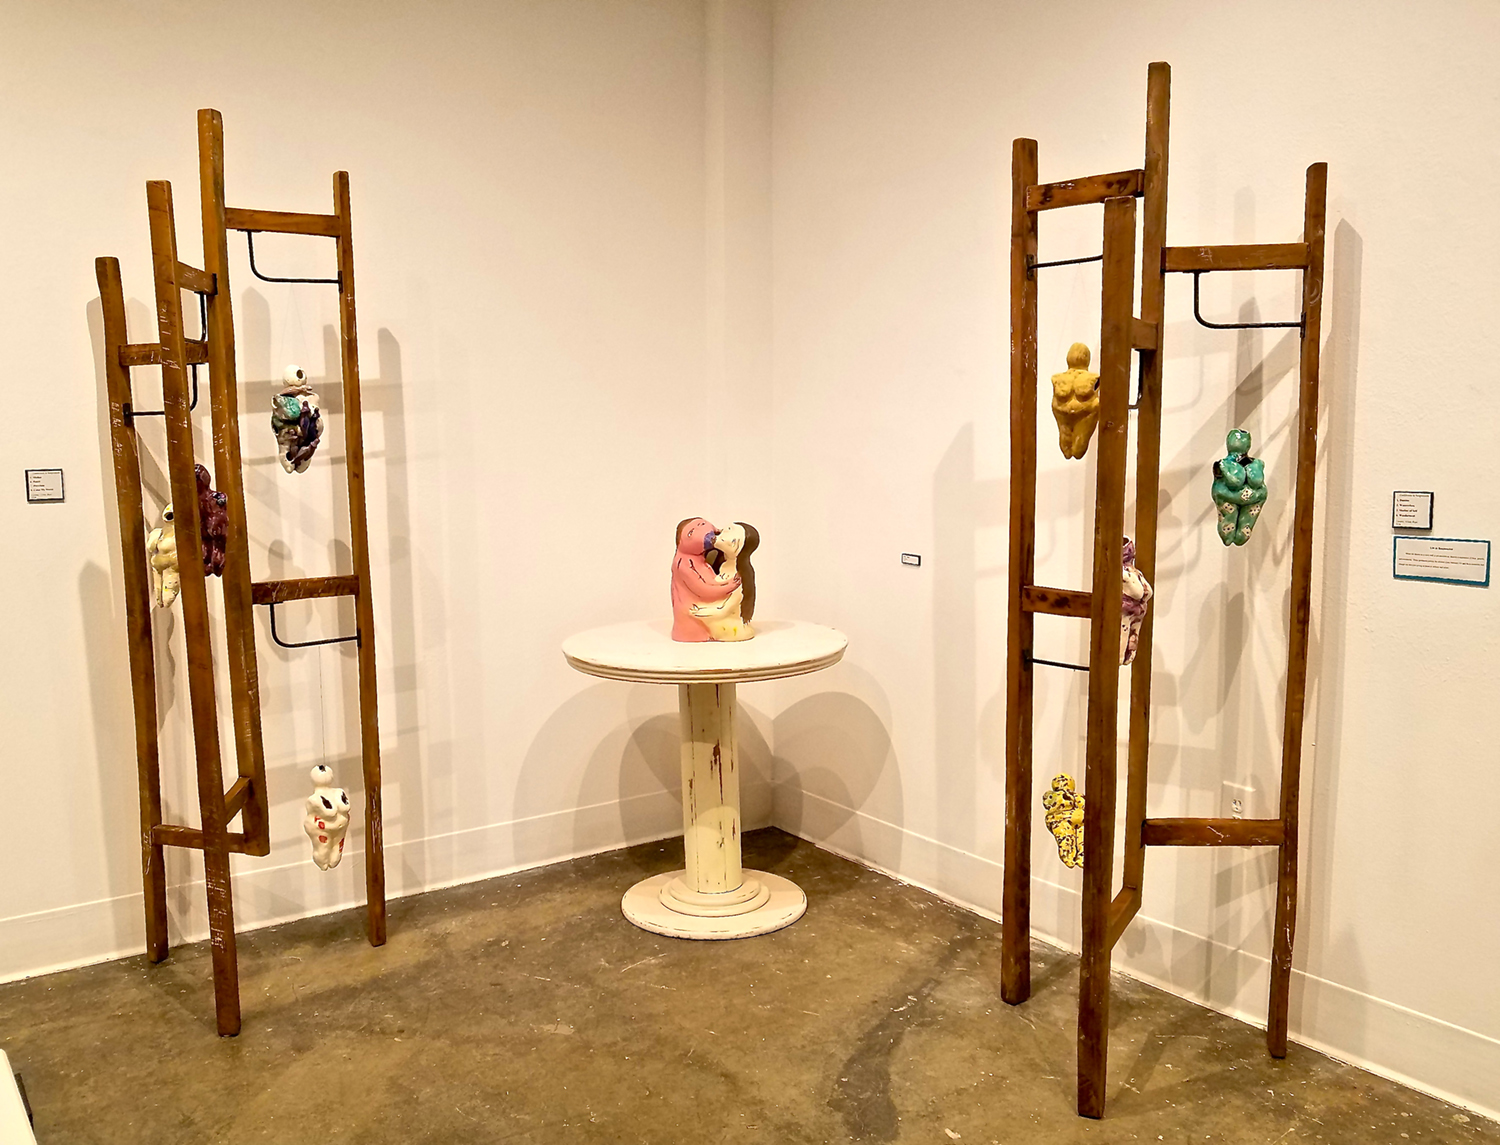 Ceramic goddesses suspended on wire racks around the ceramic piece "The Kiss". Image courtesy of Olena Ellis